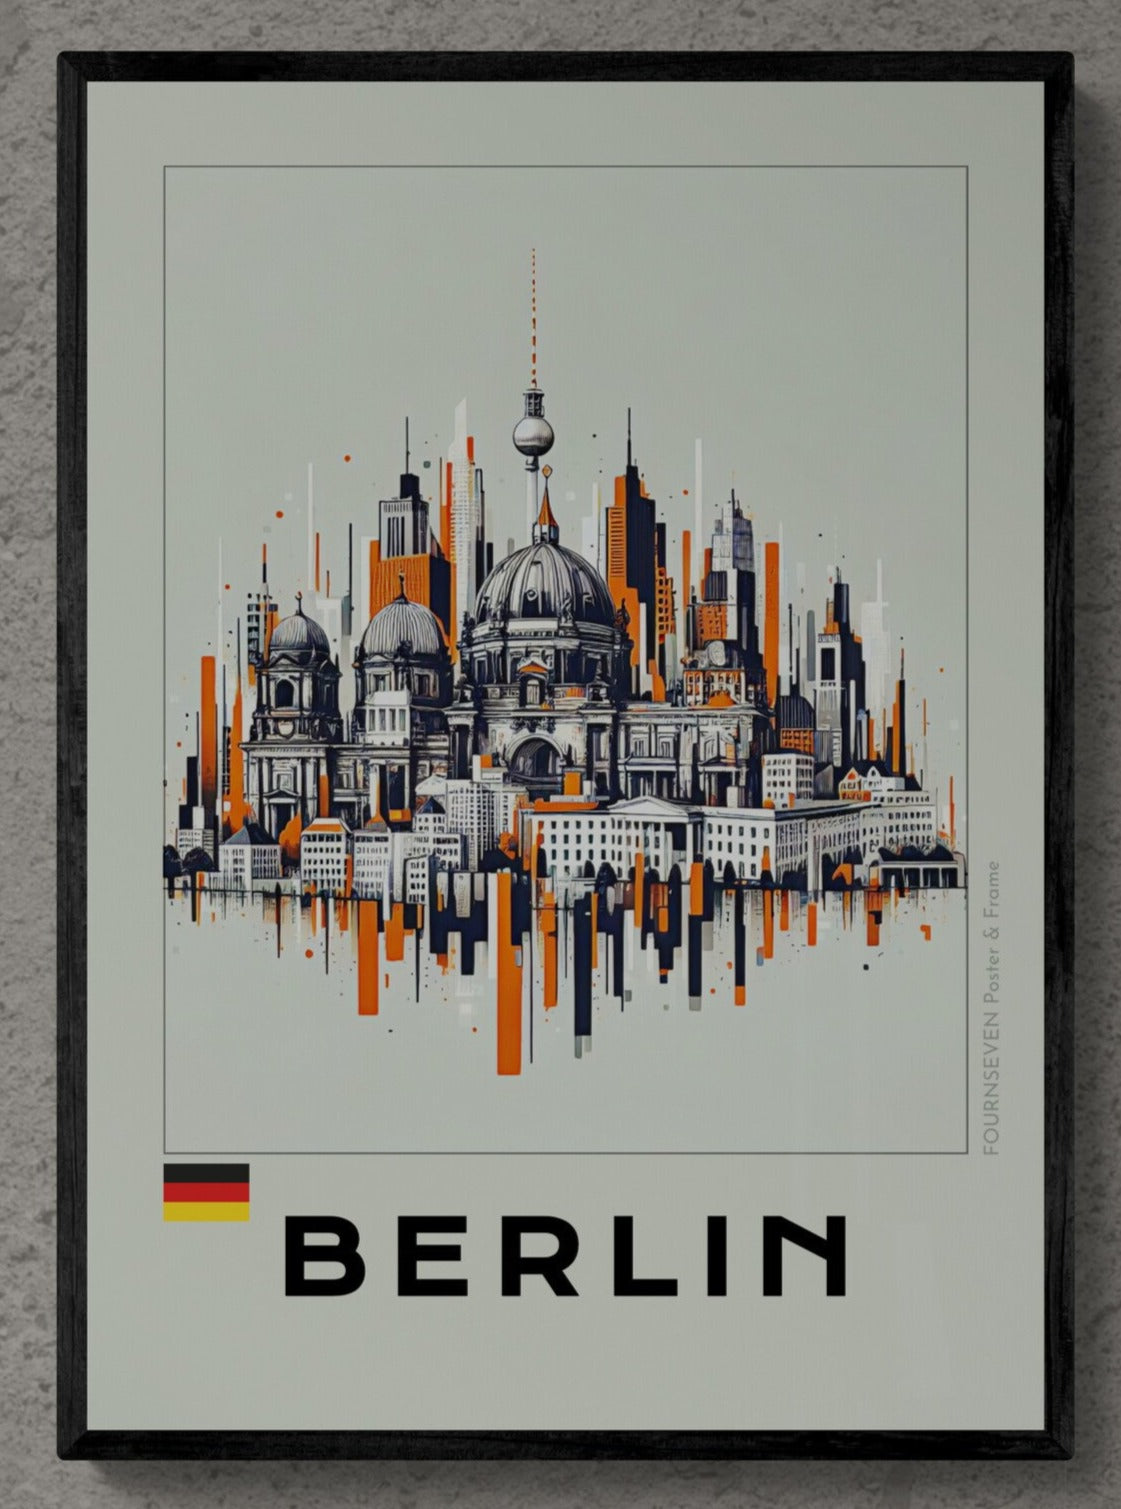 Berlin digital abstract artwork poster.